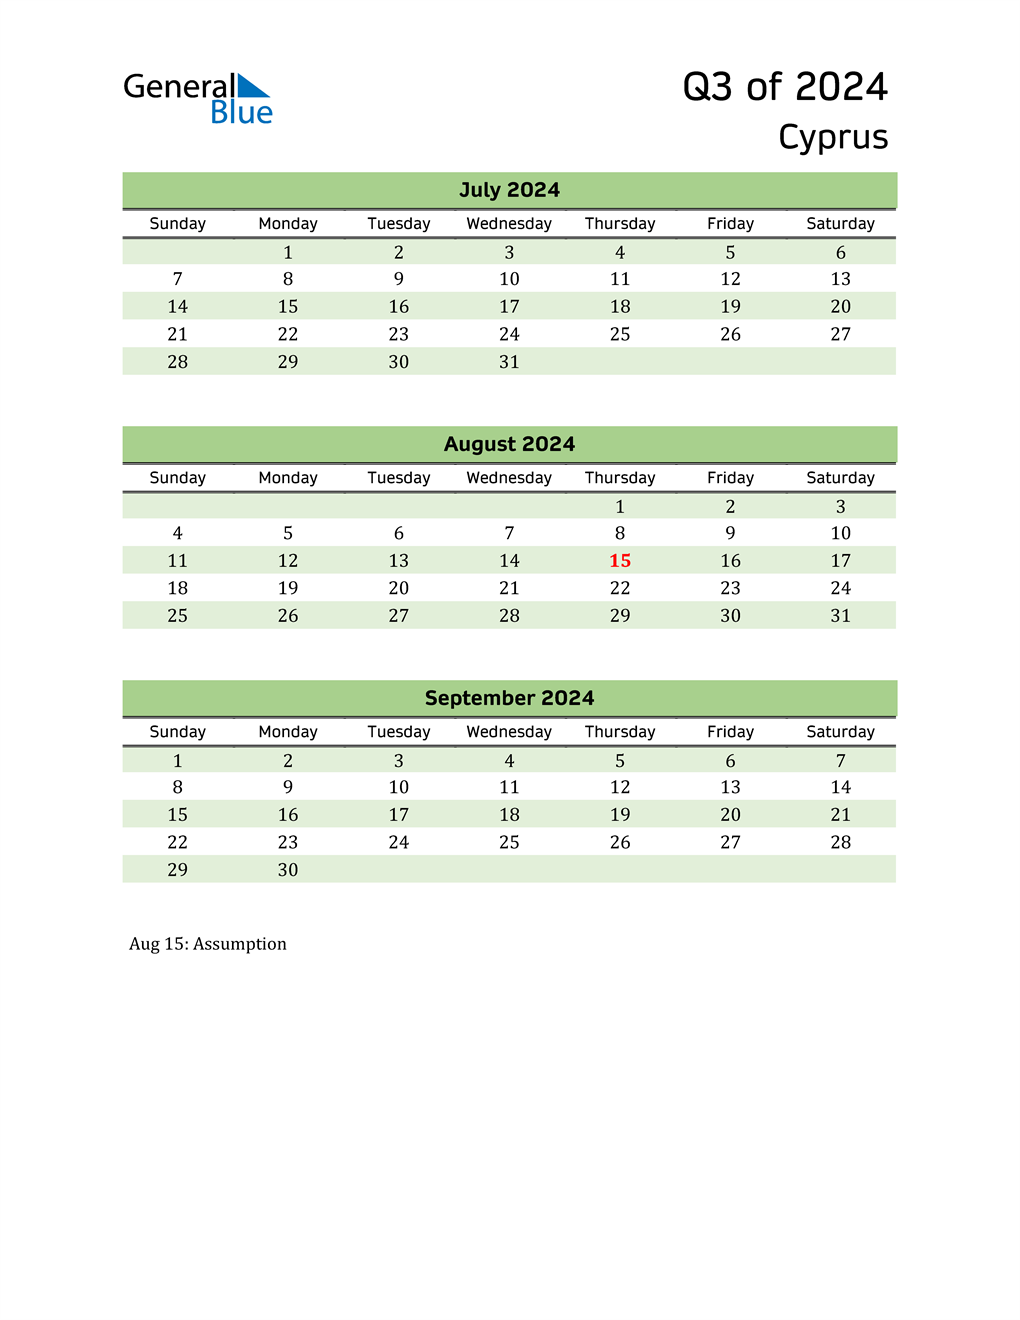  Quarterly Calendar 2024 with Cyprus Holidays 